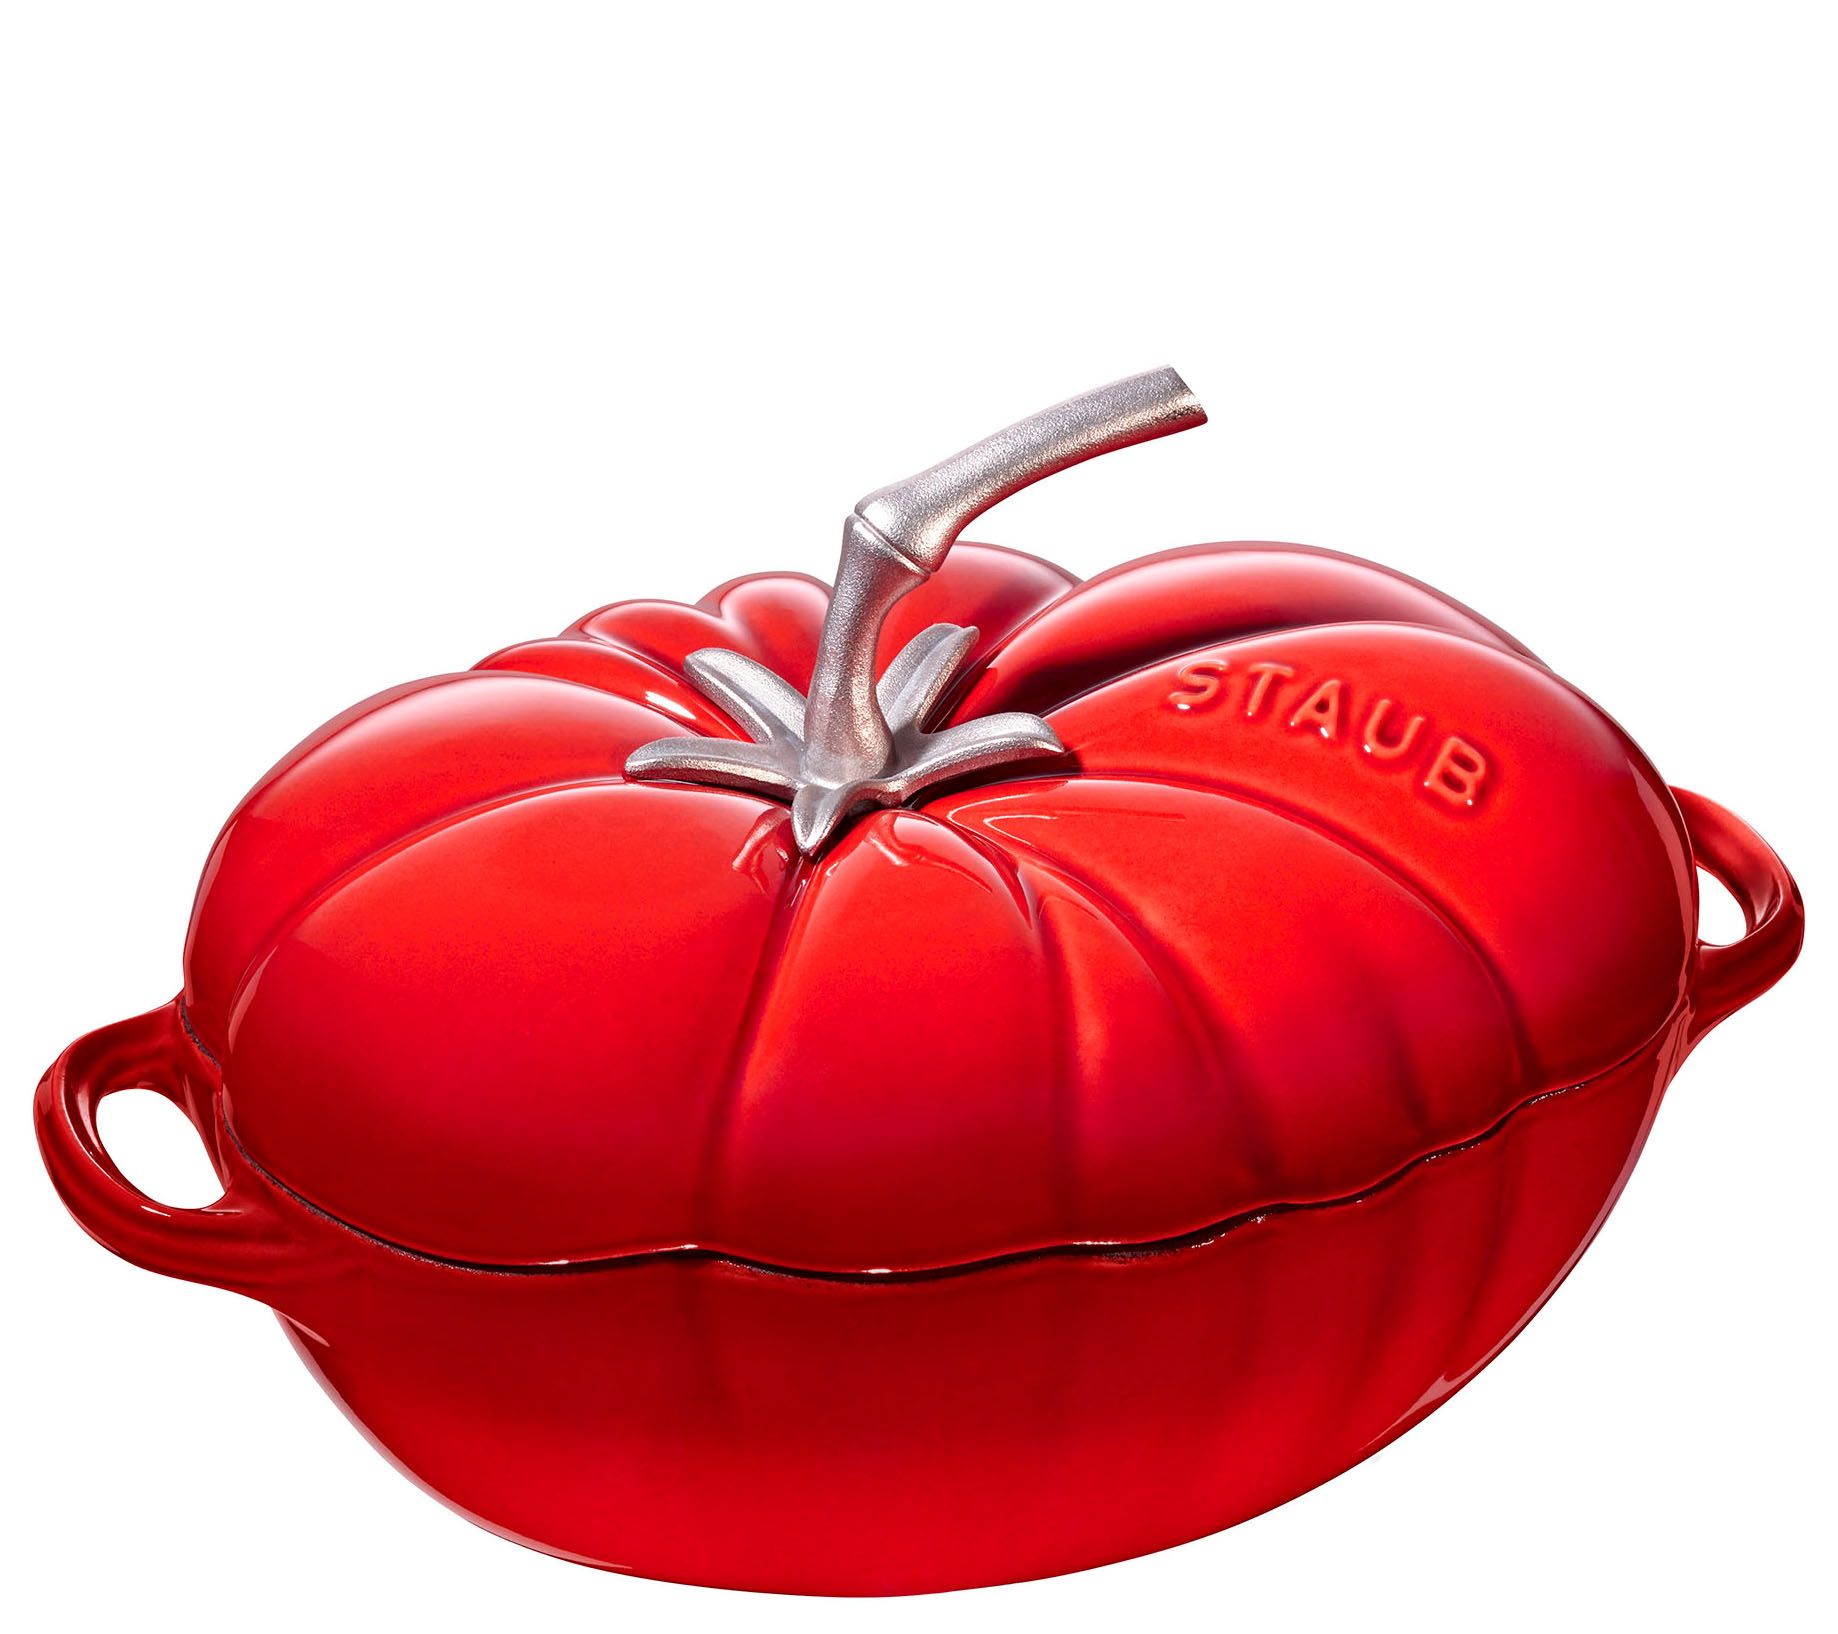 Martha Stewart Collection 2-Qt. Tomato Enameled Cast Iron Dutch